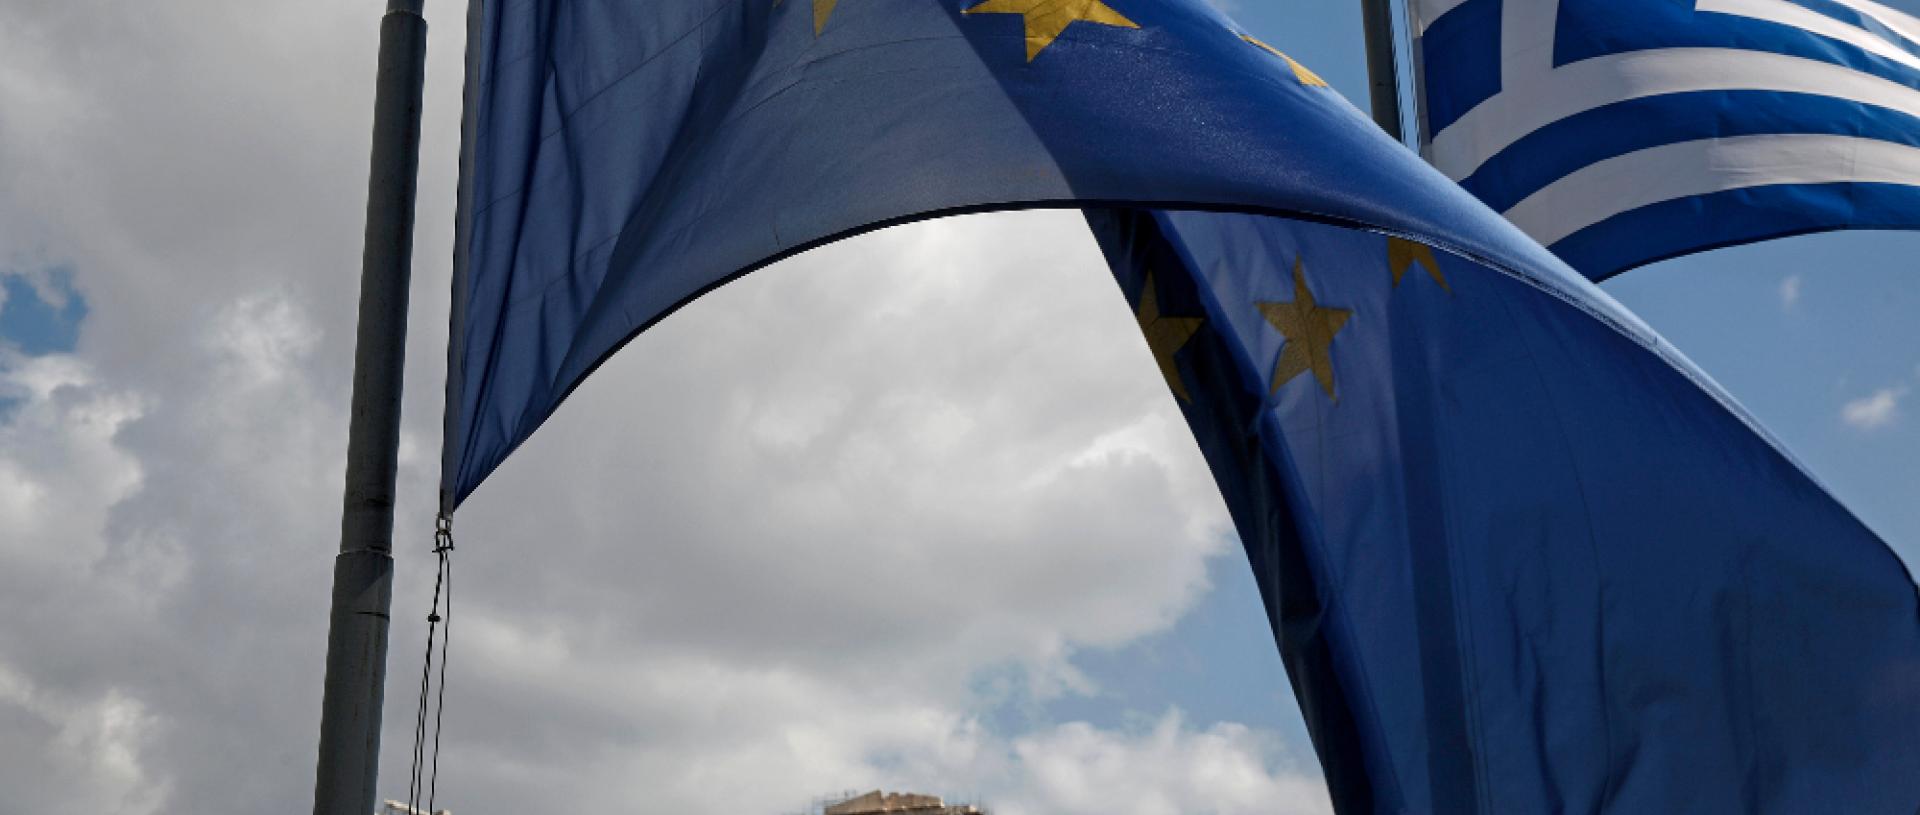 DW - Λάσετ: Ως Ευρώπη πρέπει να στηρίξουμε την Ελλάδα